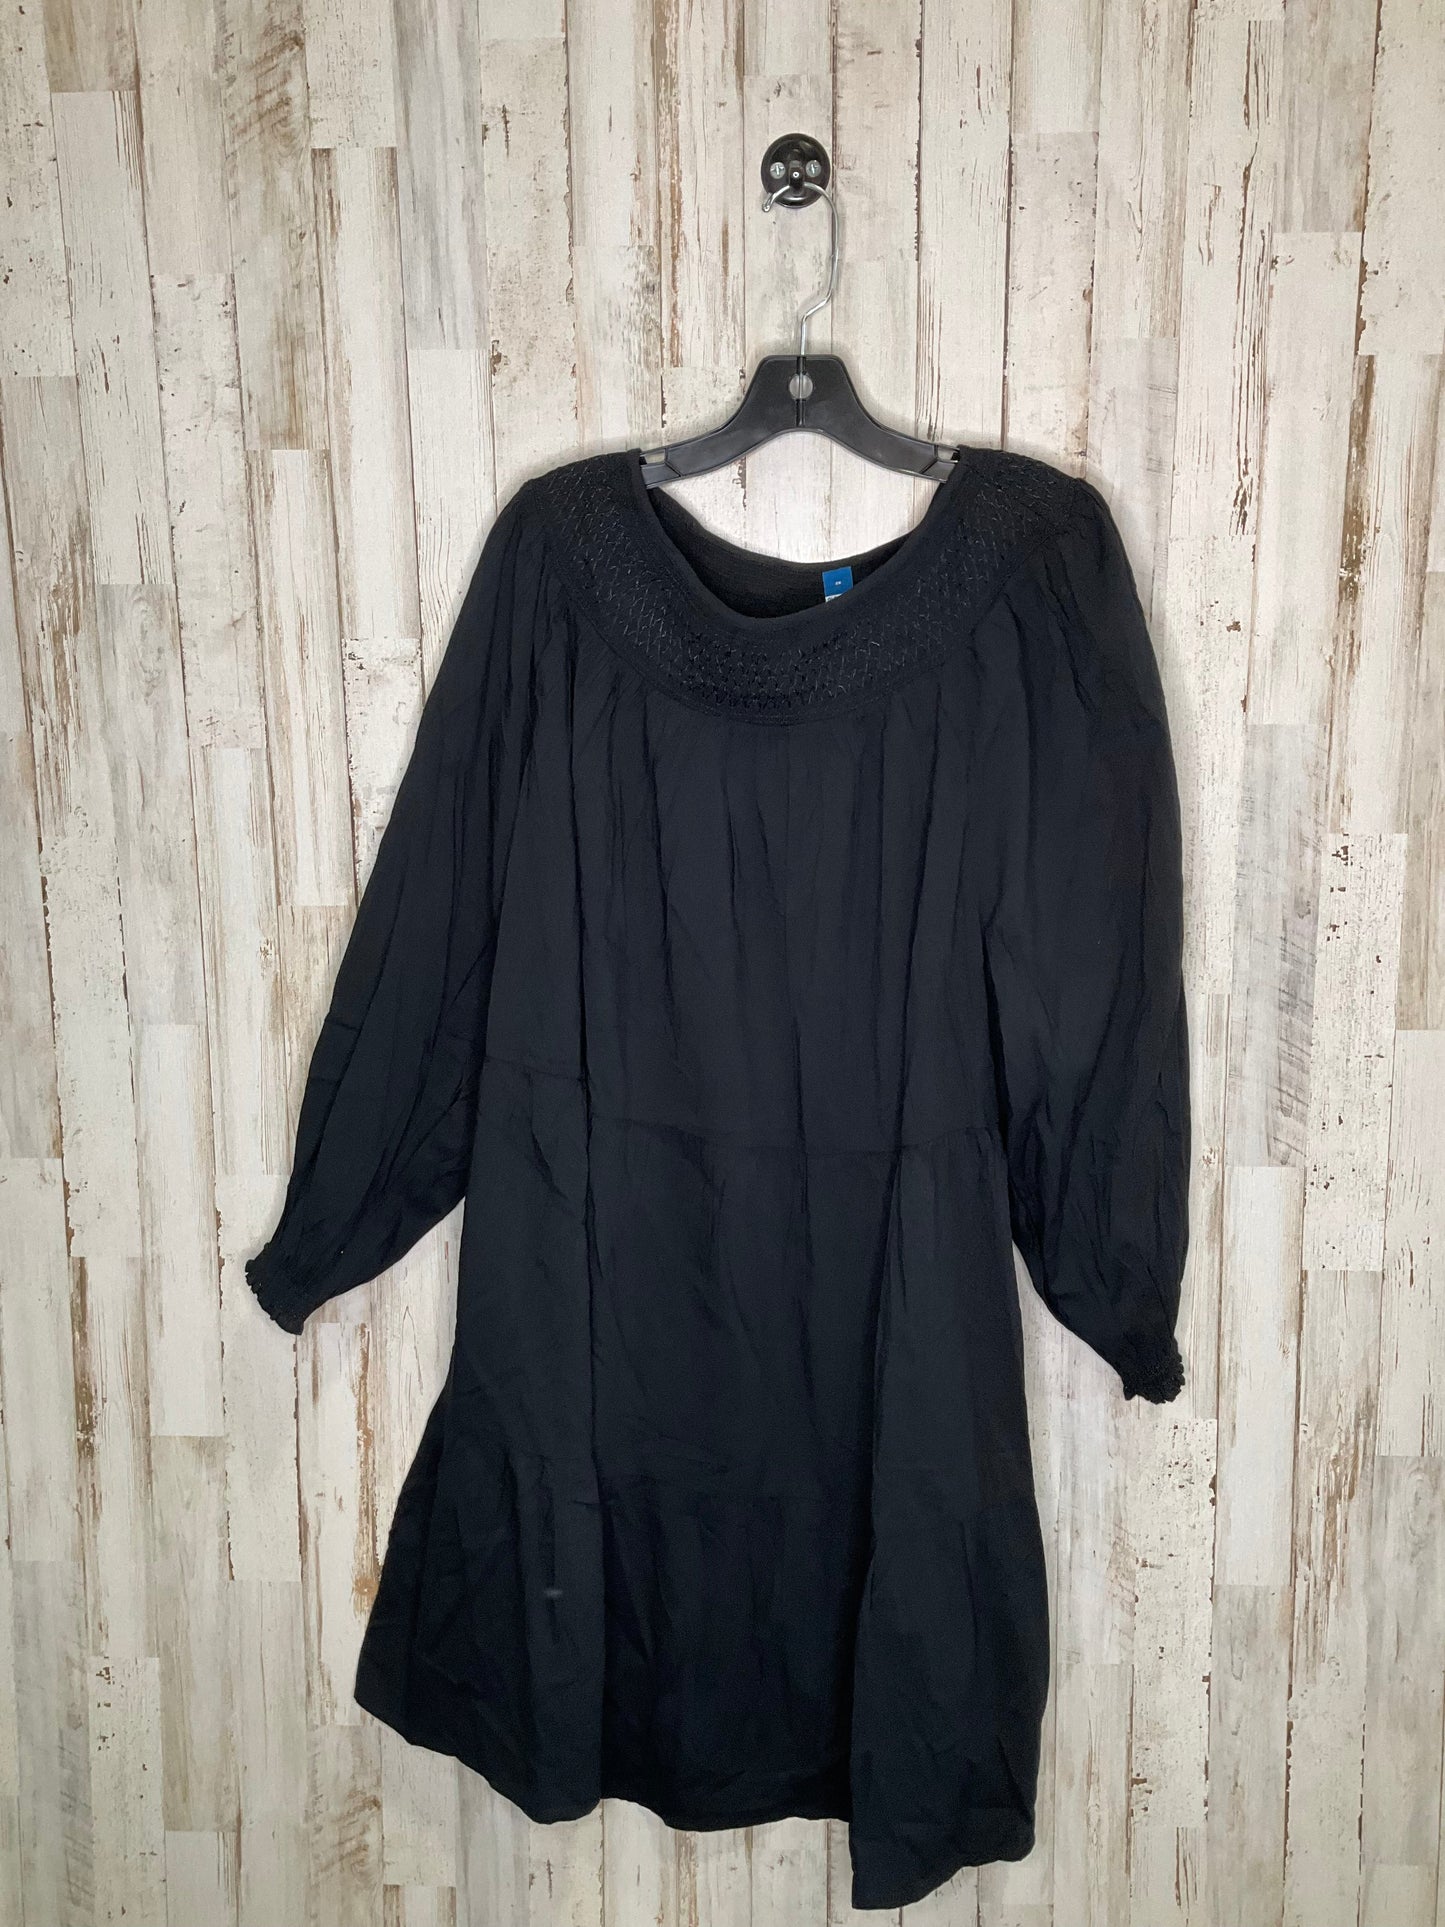 Black Dress Casual Midi Old Navy, Size 2x